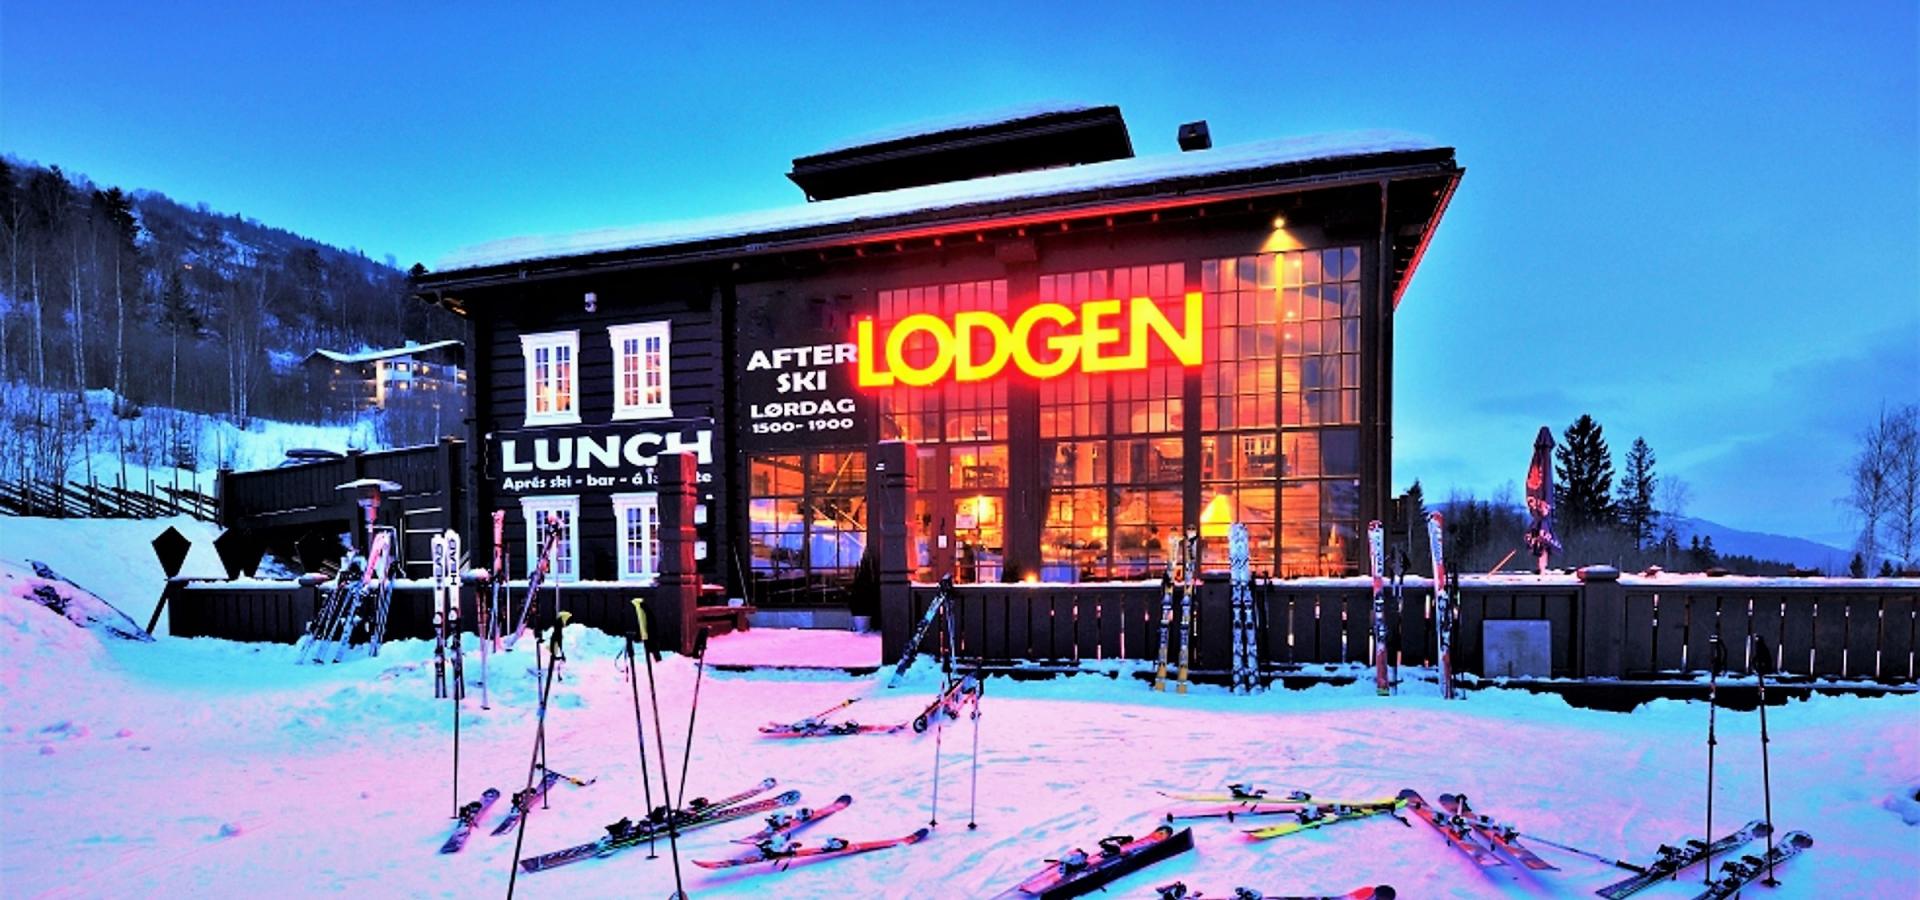 Lodgen restaurant